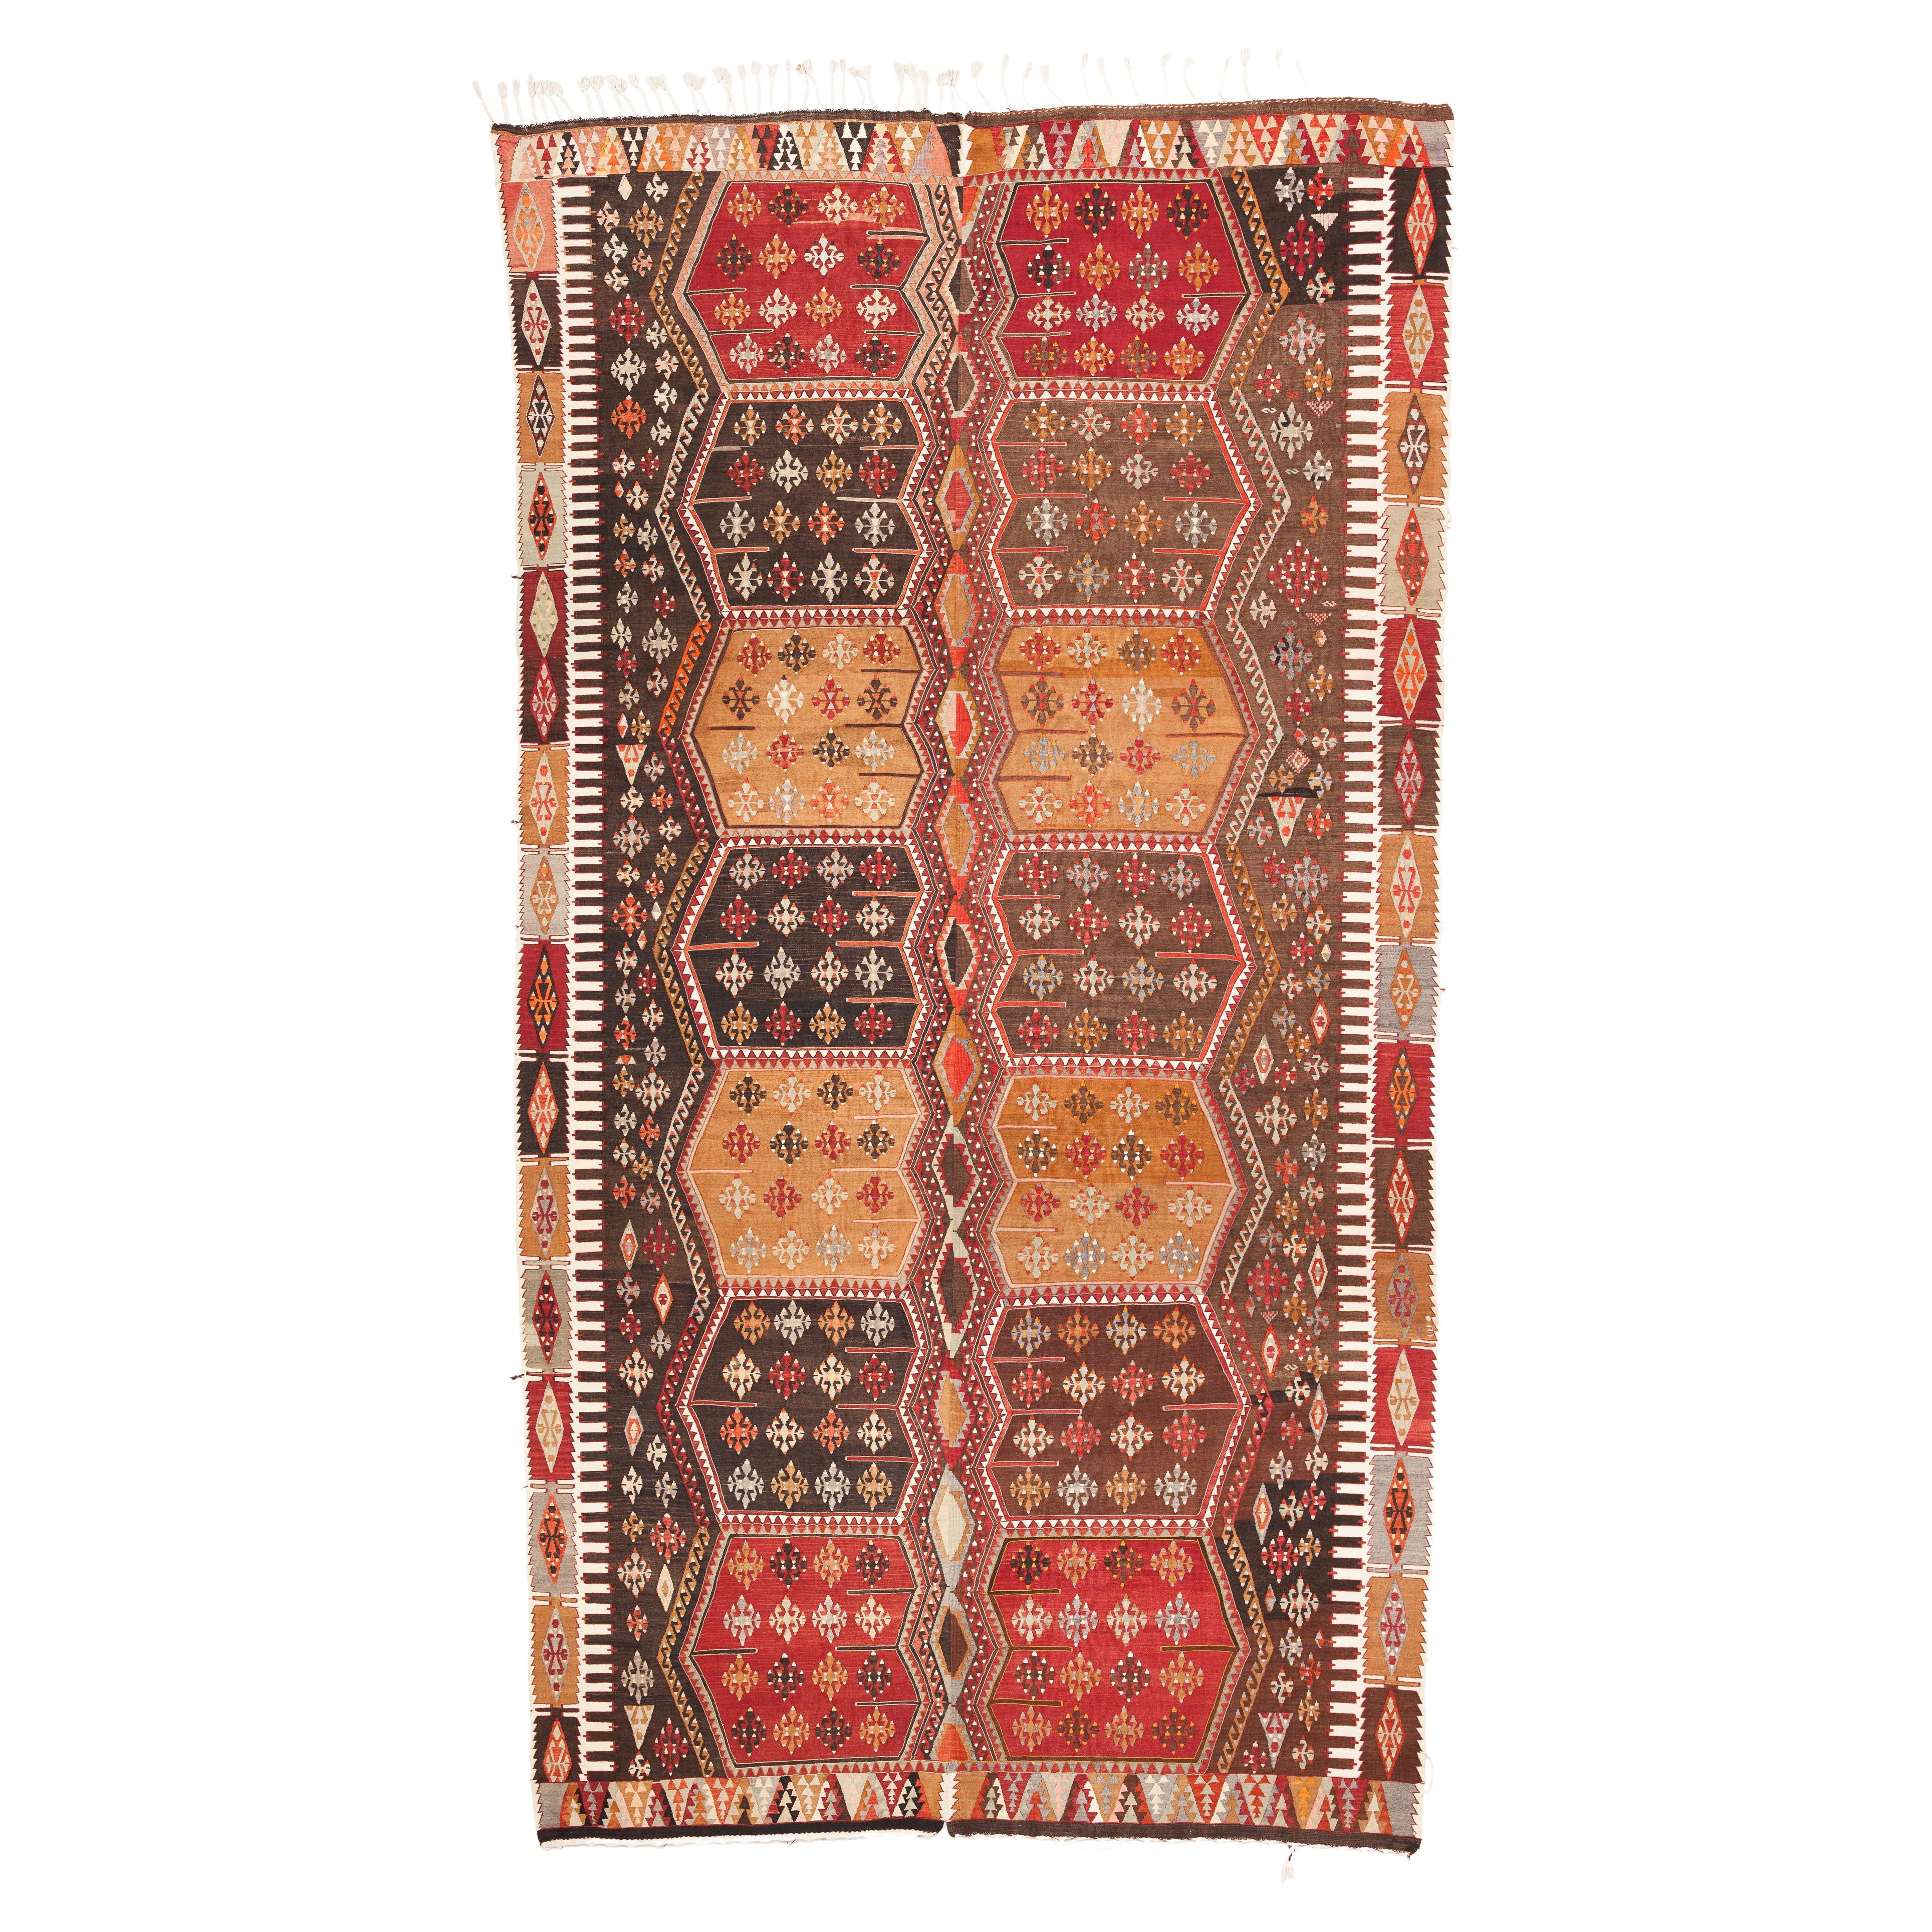 Old Sivas Kilim Central Anatolian Rug Turkish Carpet